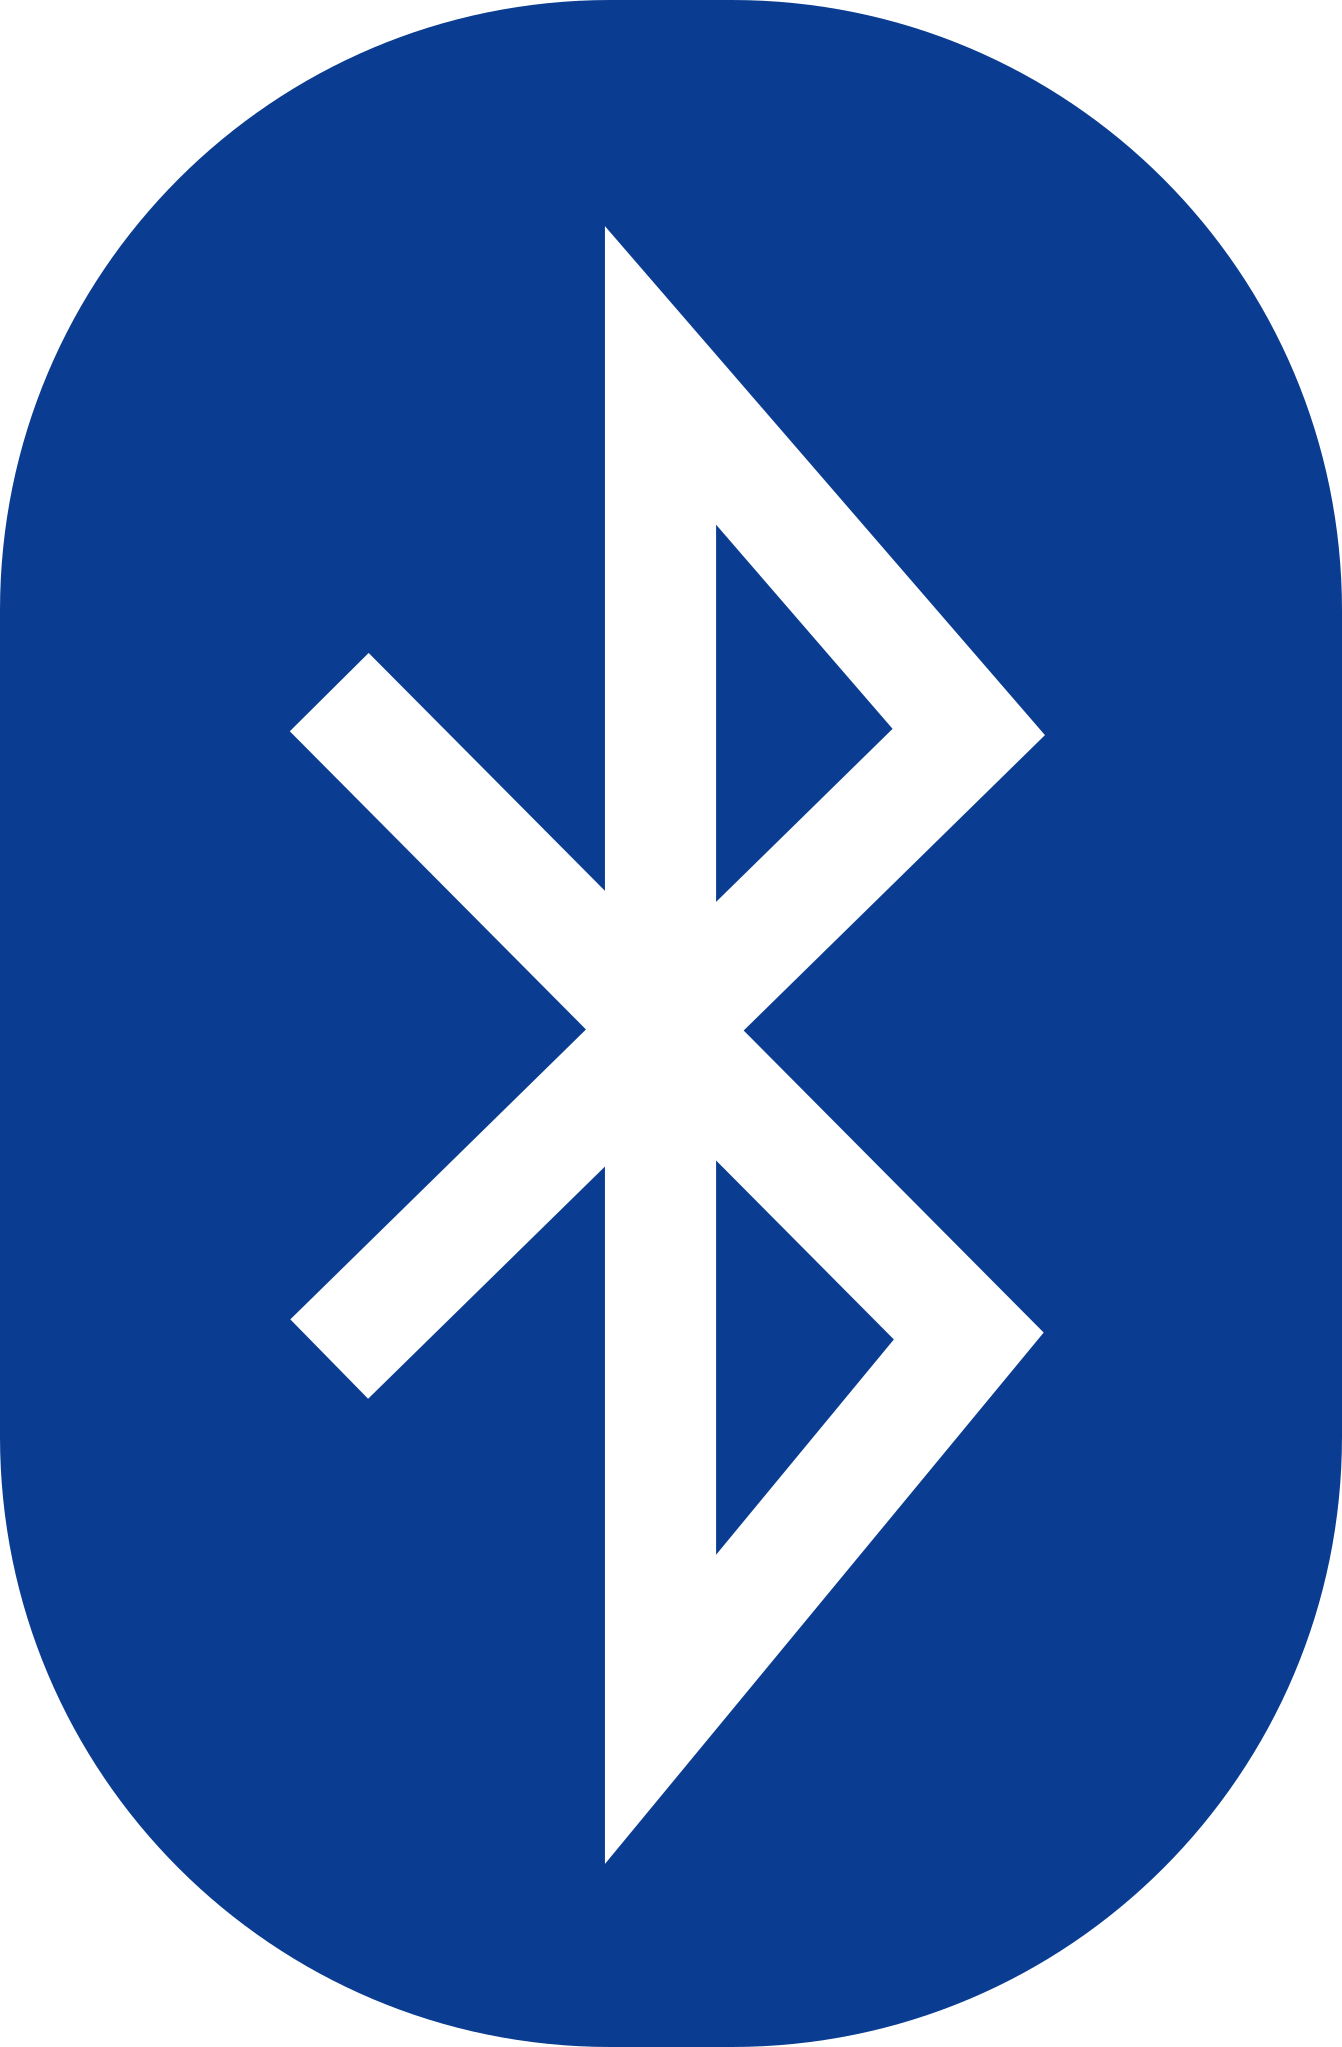 Bluetooth symbol or icon